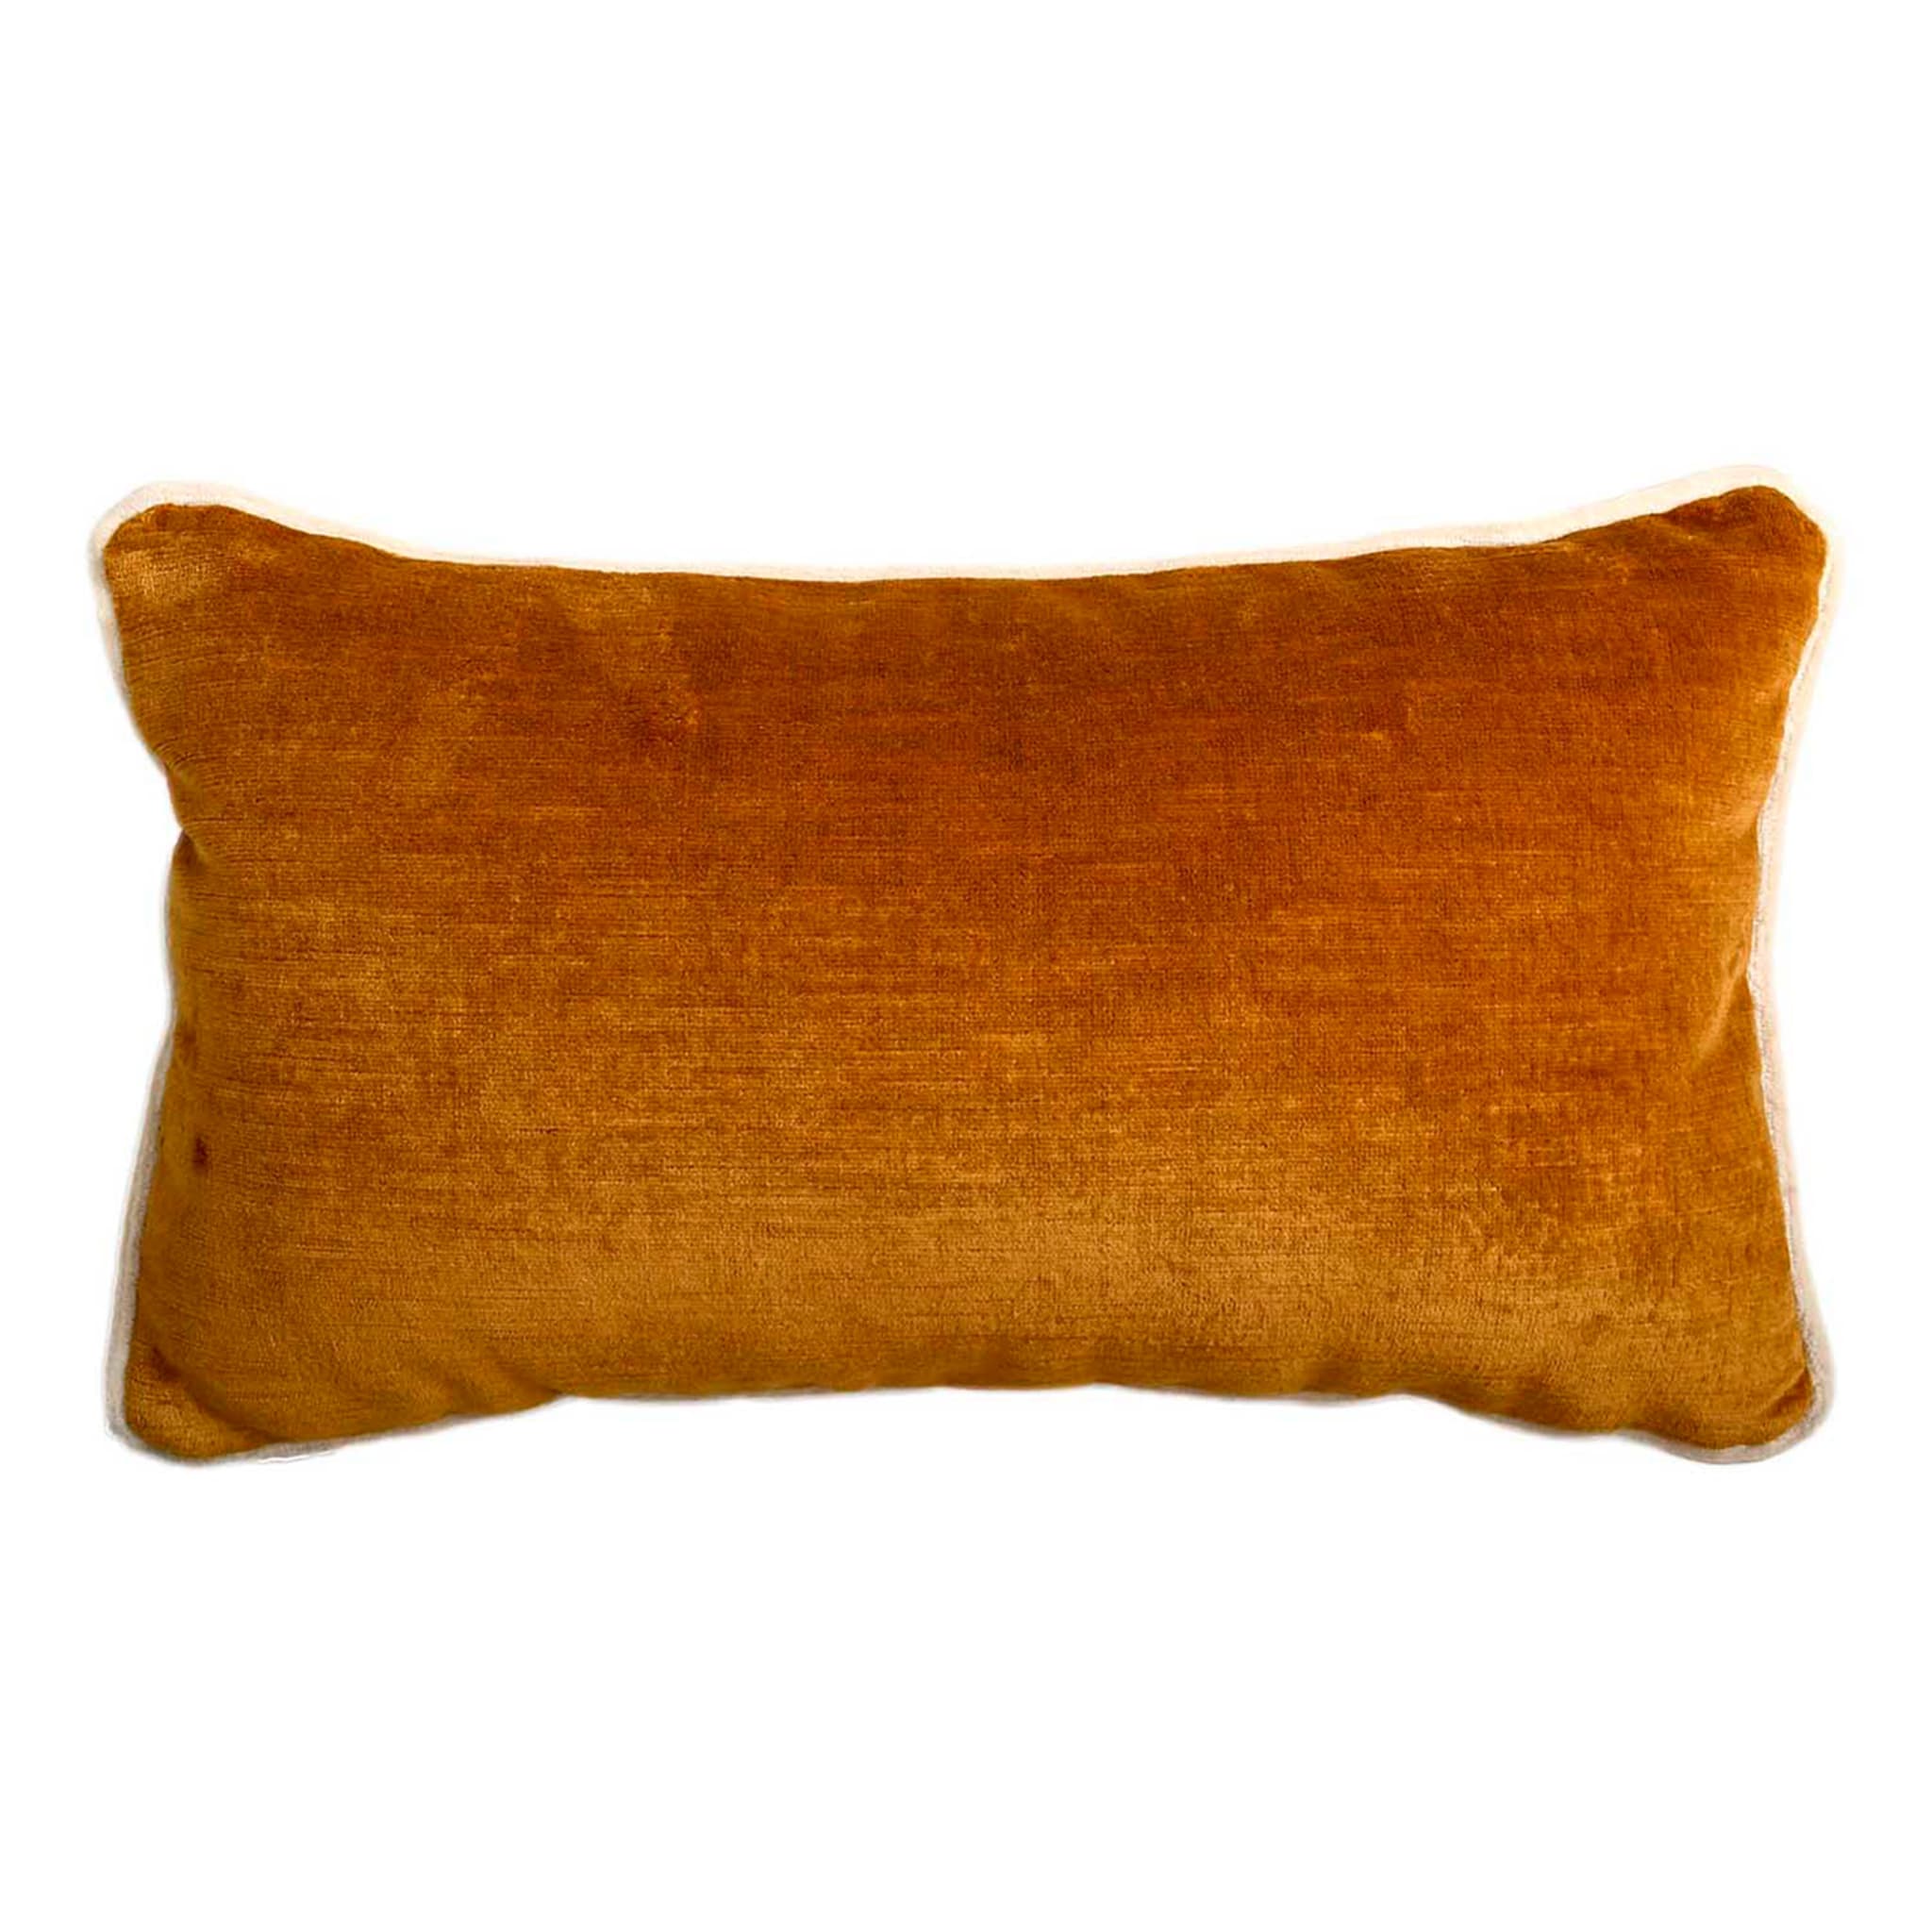 Mustard Longue Cushion in Pied-De-Poule jacquard fabric - Alternative view 1